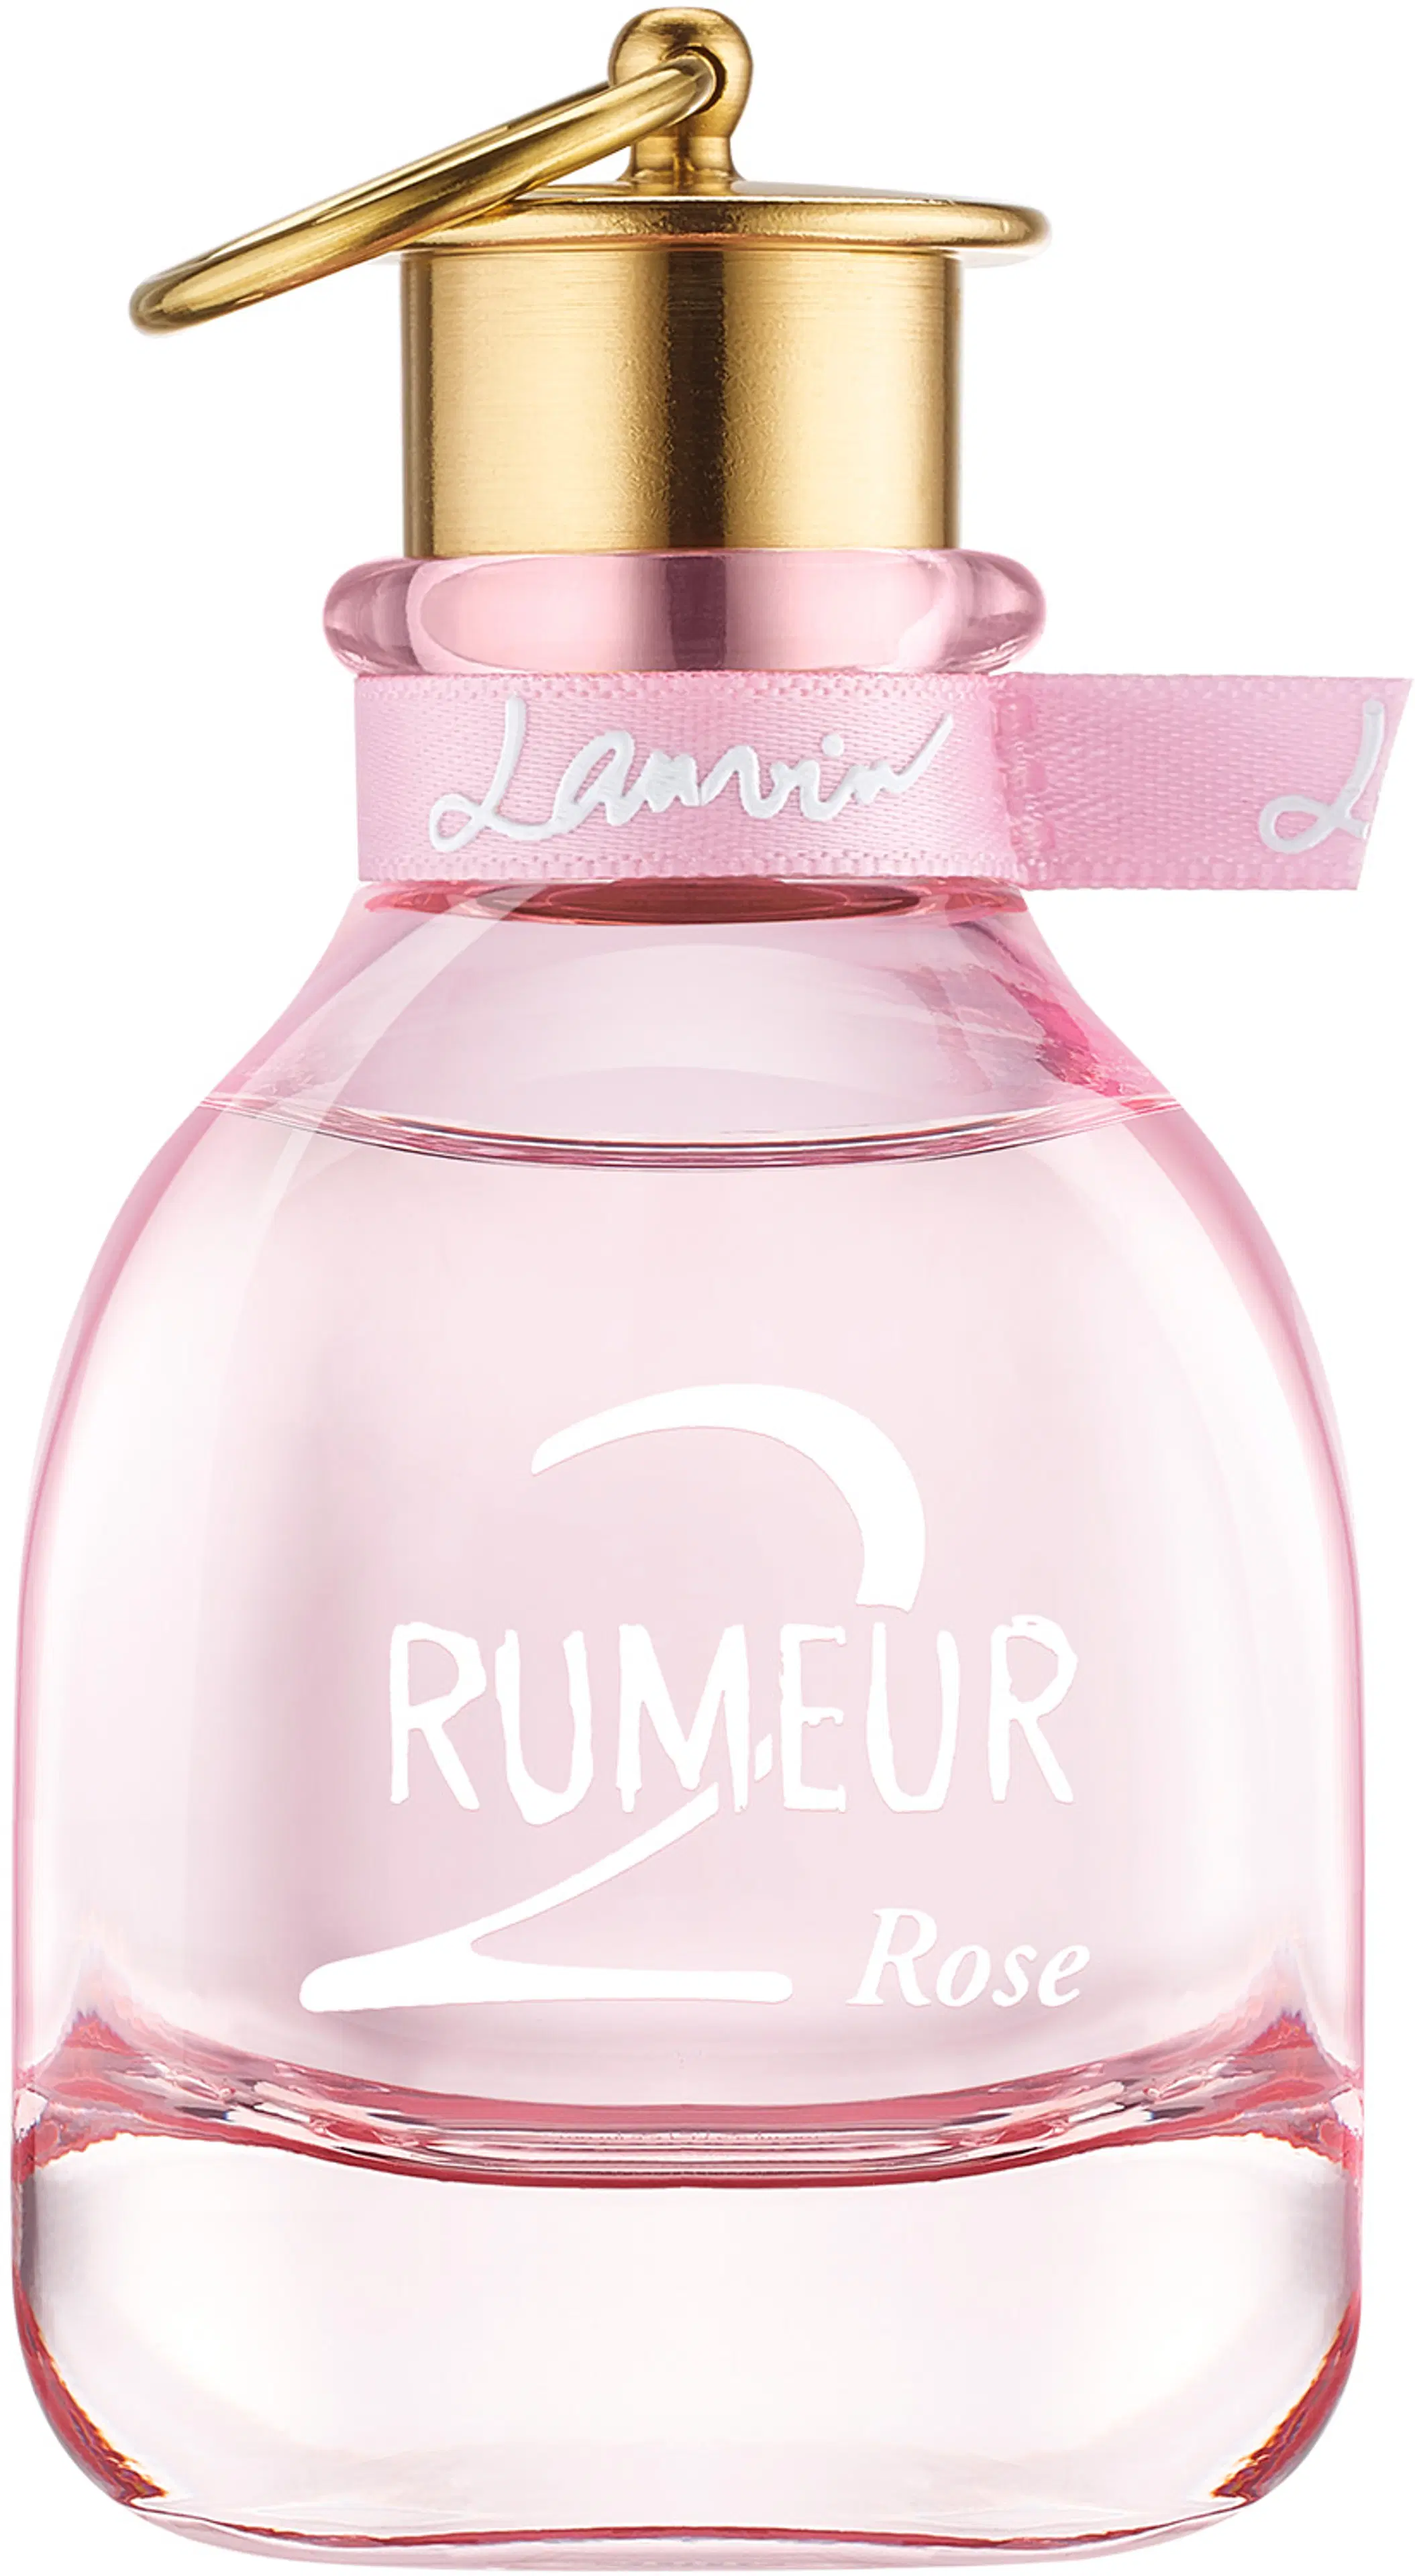 Lanvin Rumeur 2 Rose EdP Spray tuoksu 30 ml